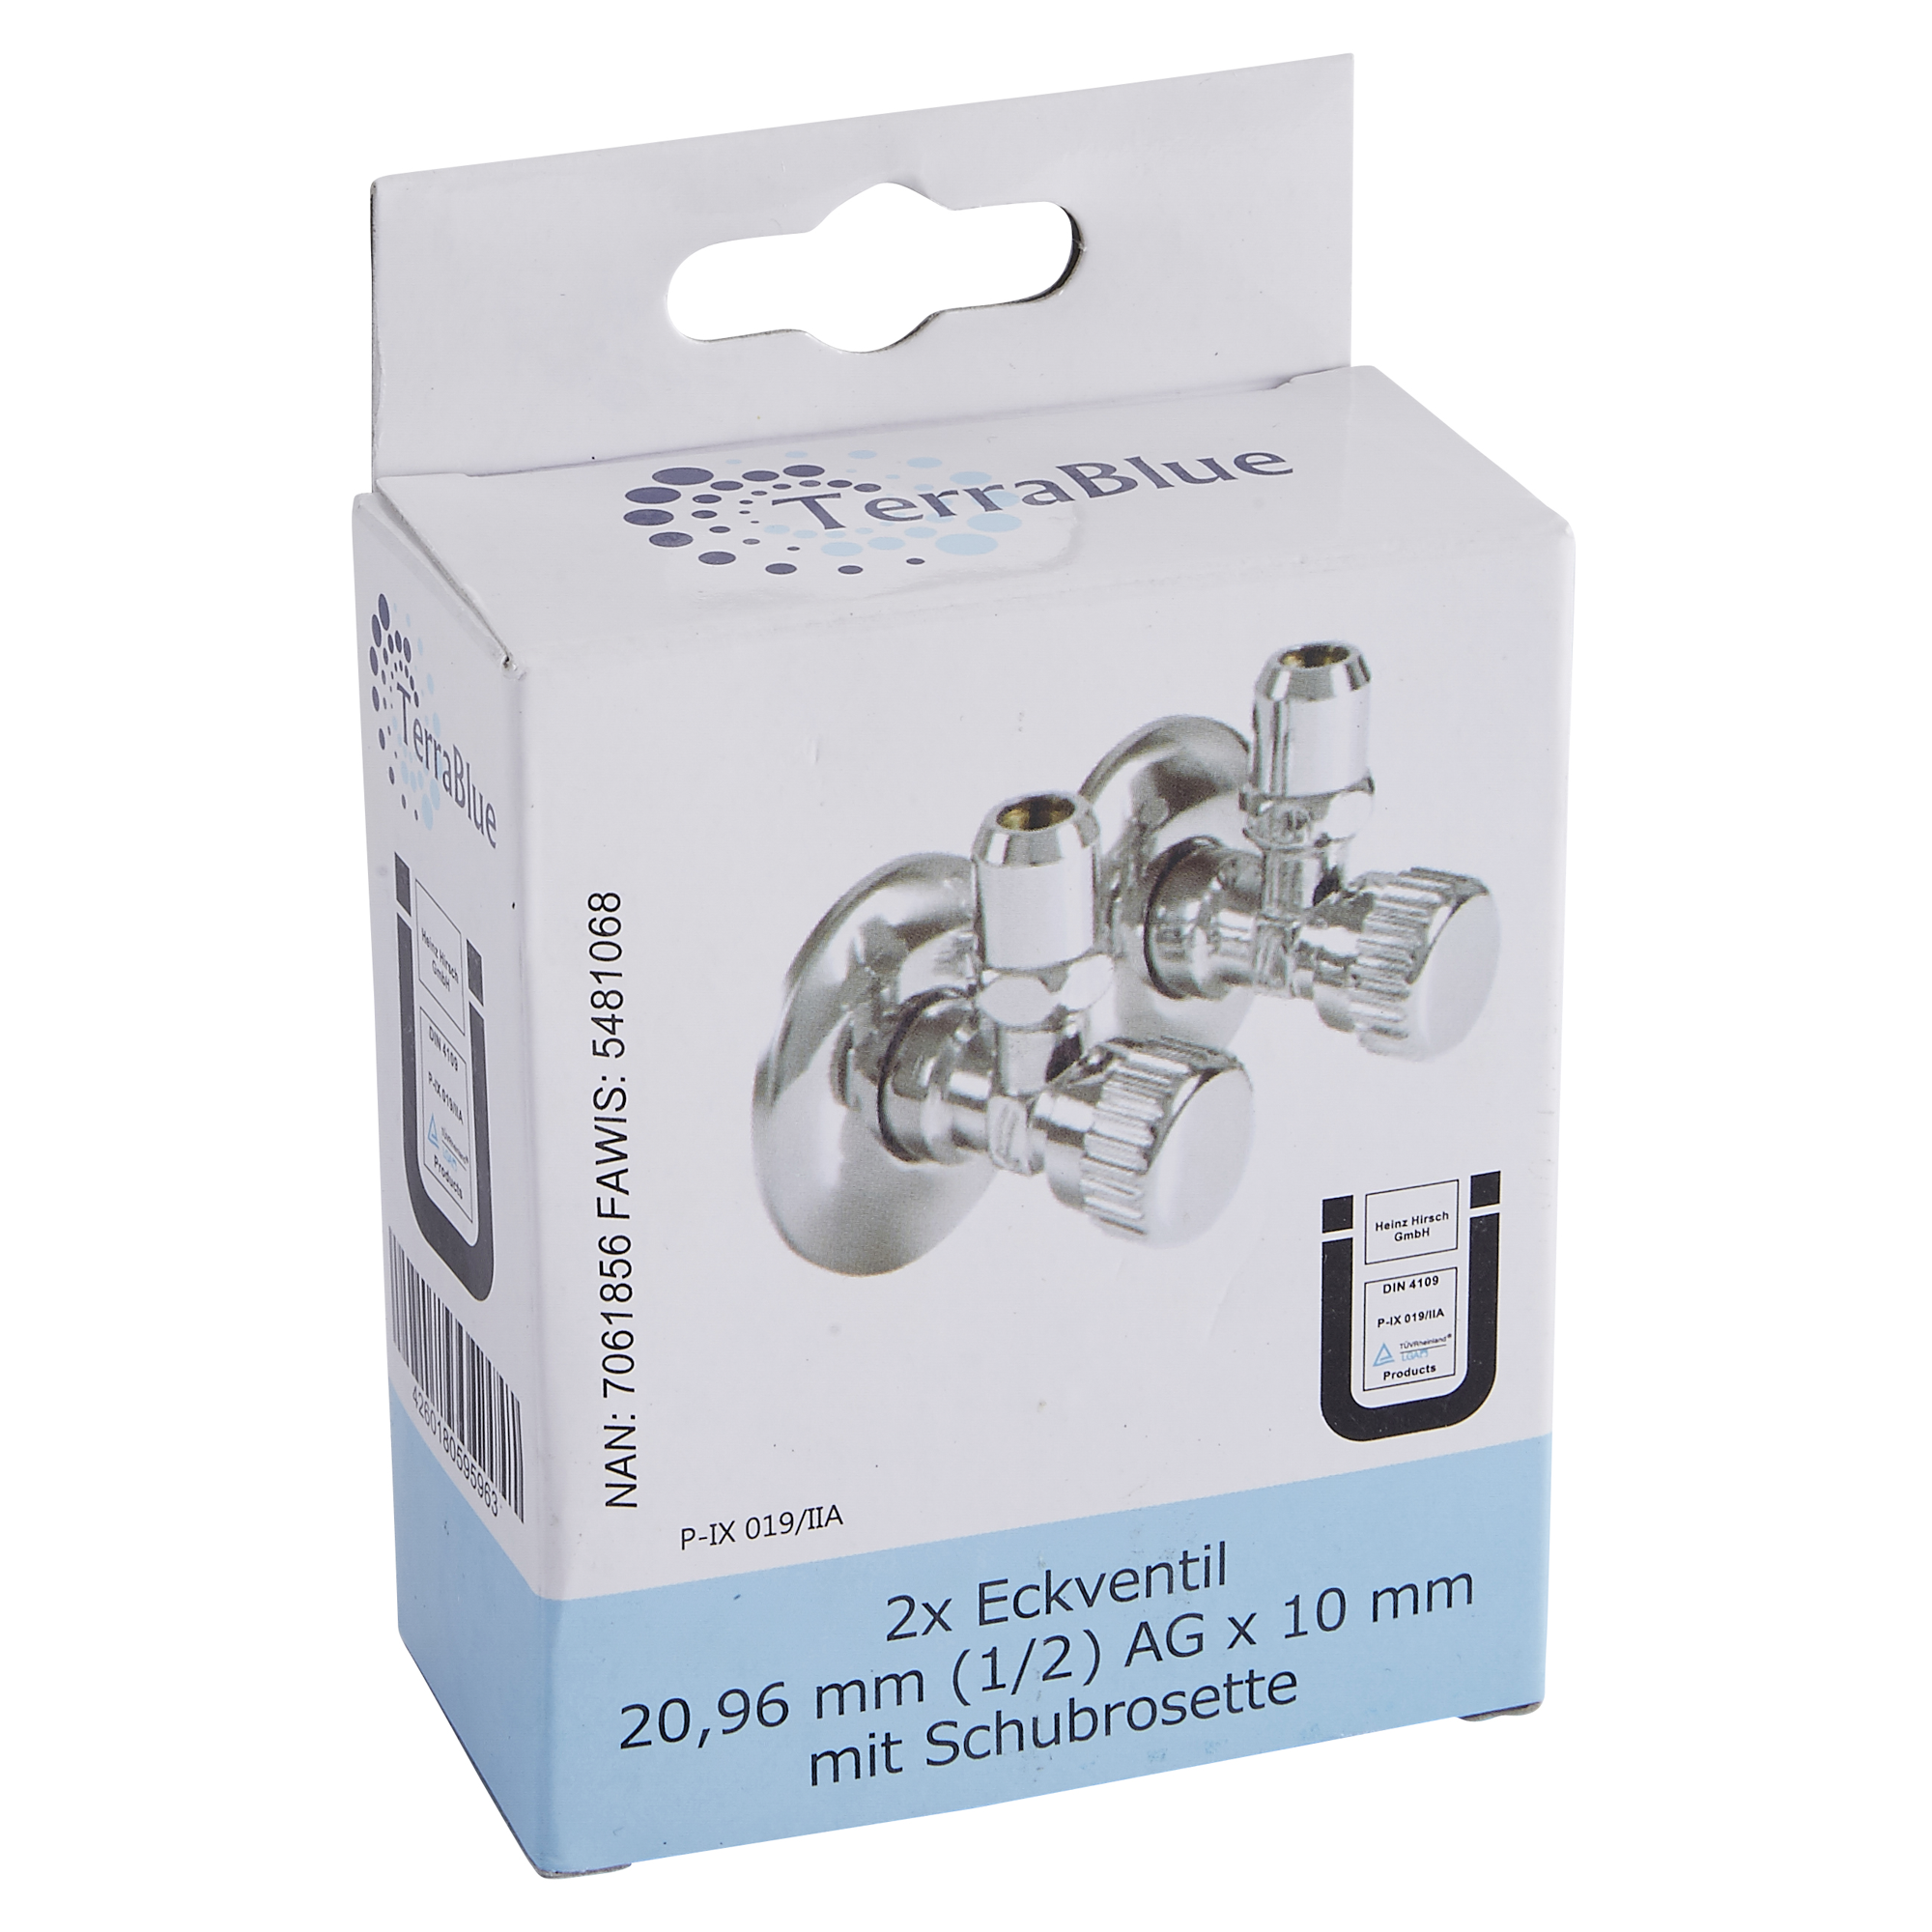 Eckventil verchromt 1/2" (20,96 mm) mit Schubrosette AG 10 mm 2 Stück + product picture